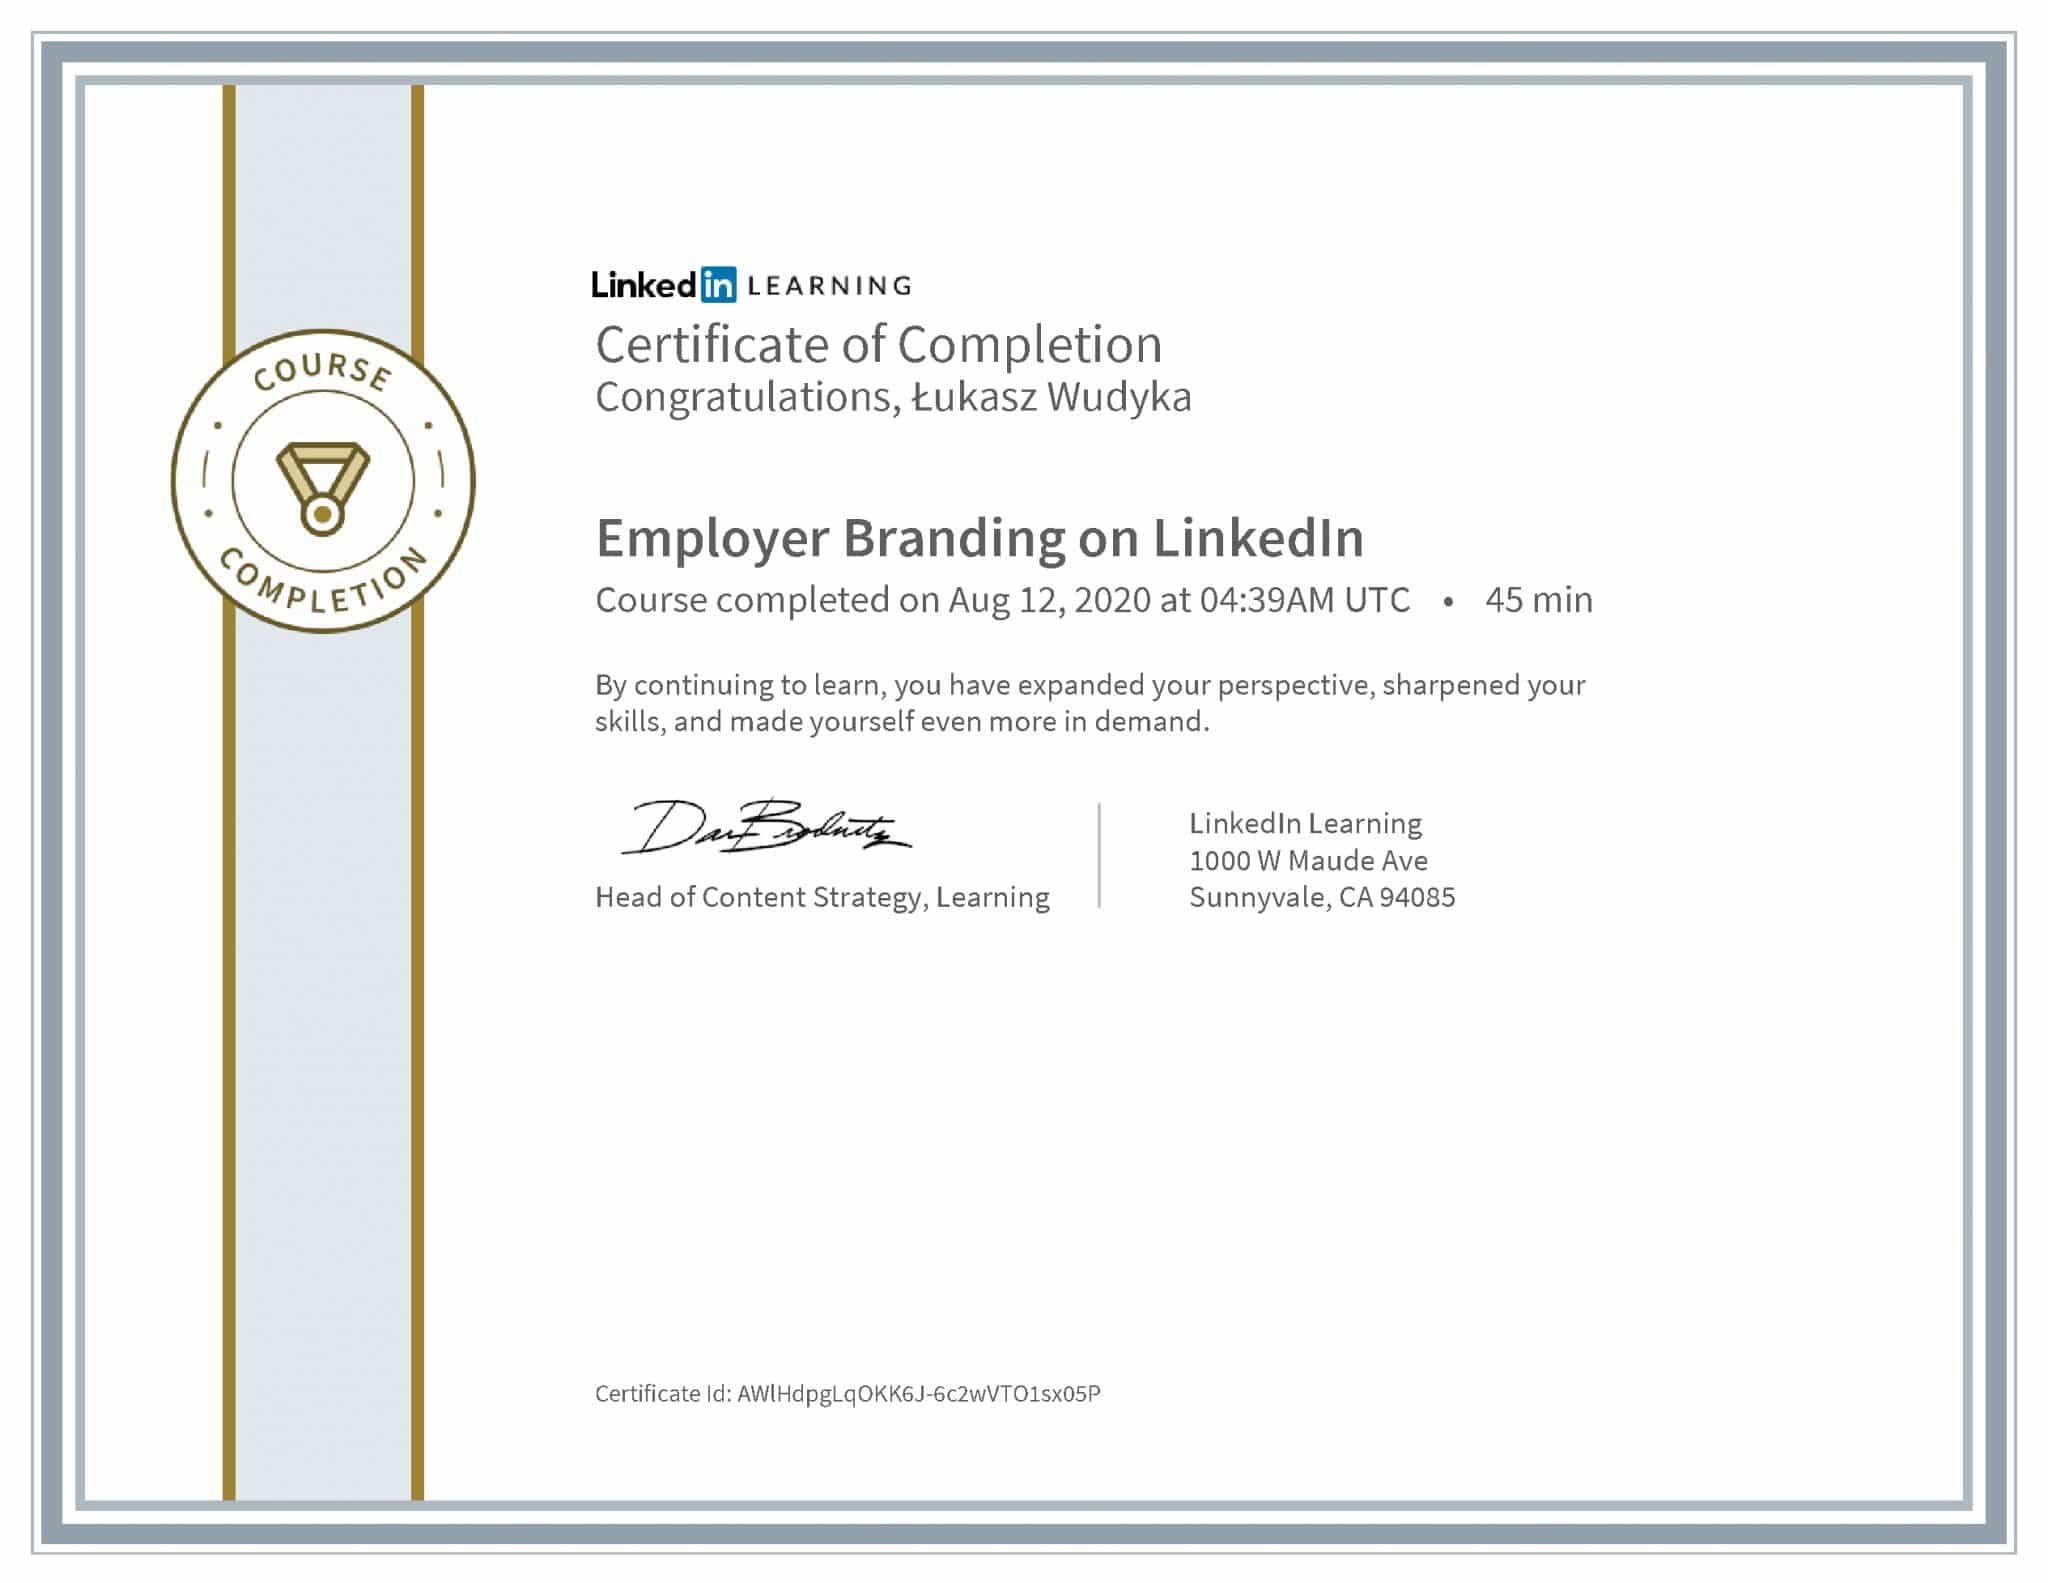 Łukasz Wudyka certyfikat LinkedIn Employer Branding on LinkedIn